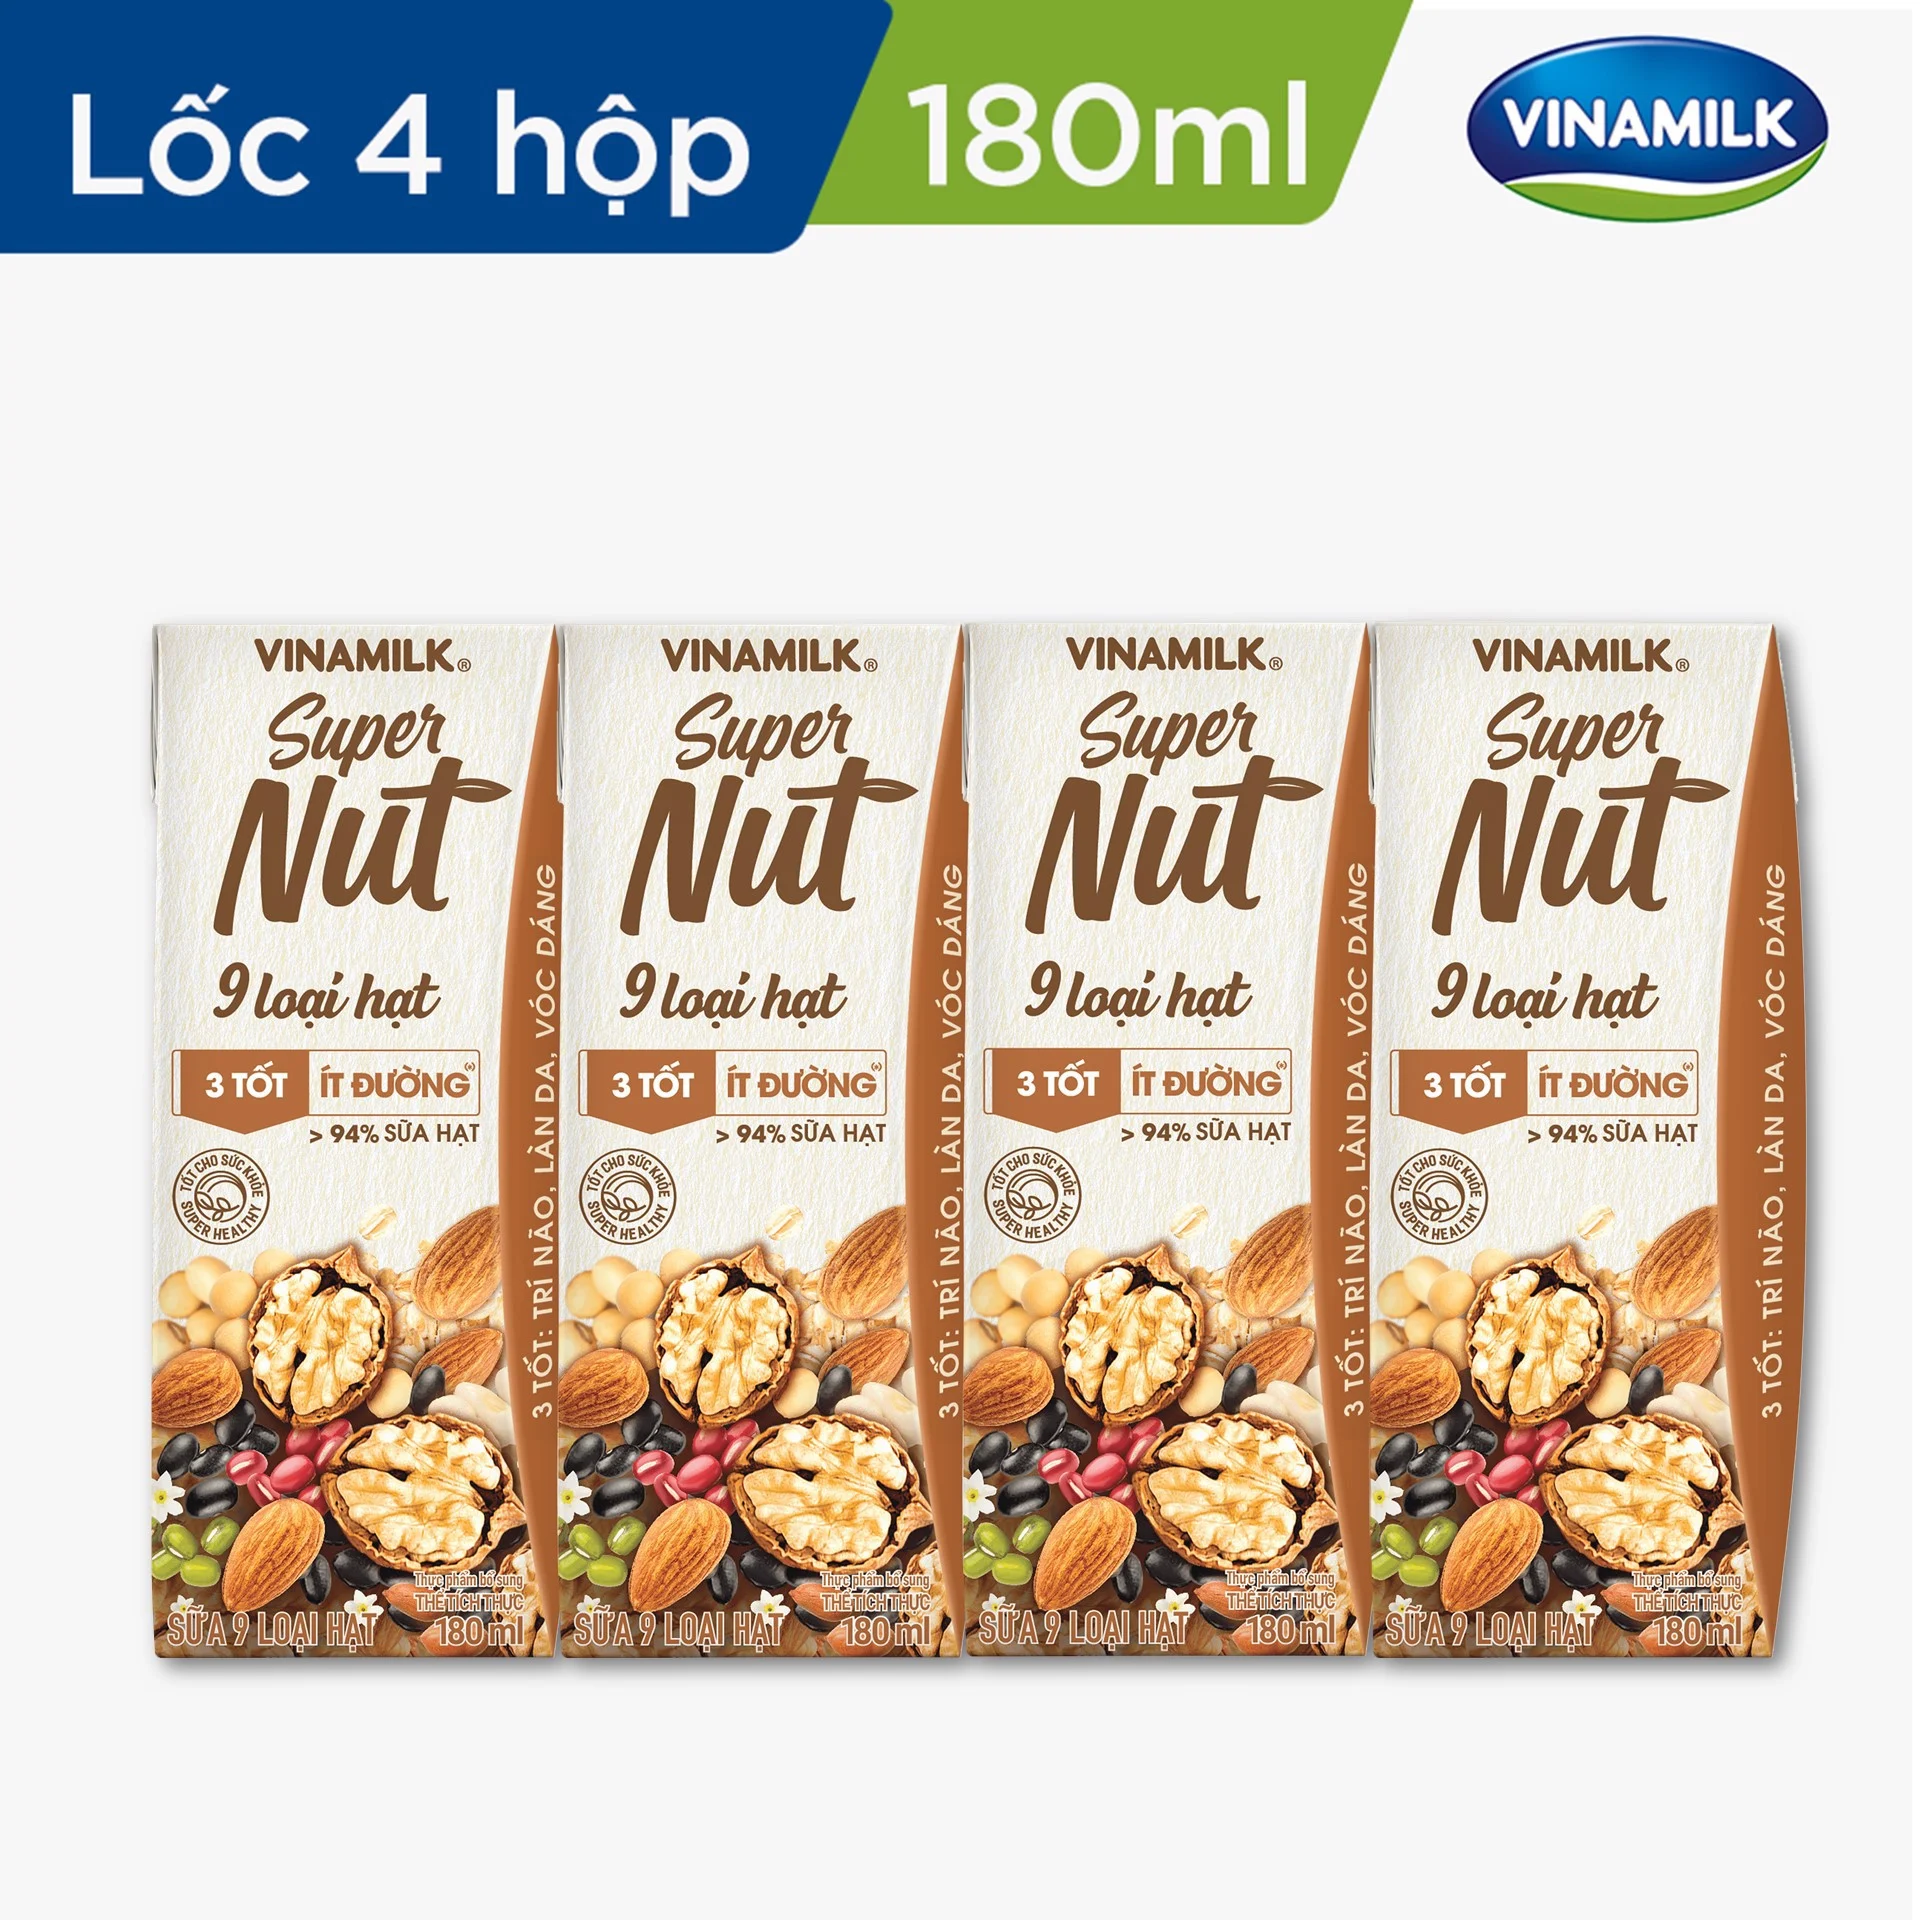 Sữa 9 loại hạt Vinamilk Super Nut - Thùng 24 hộp 180ml